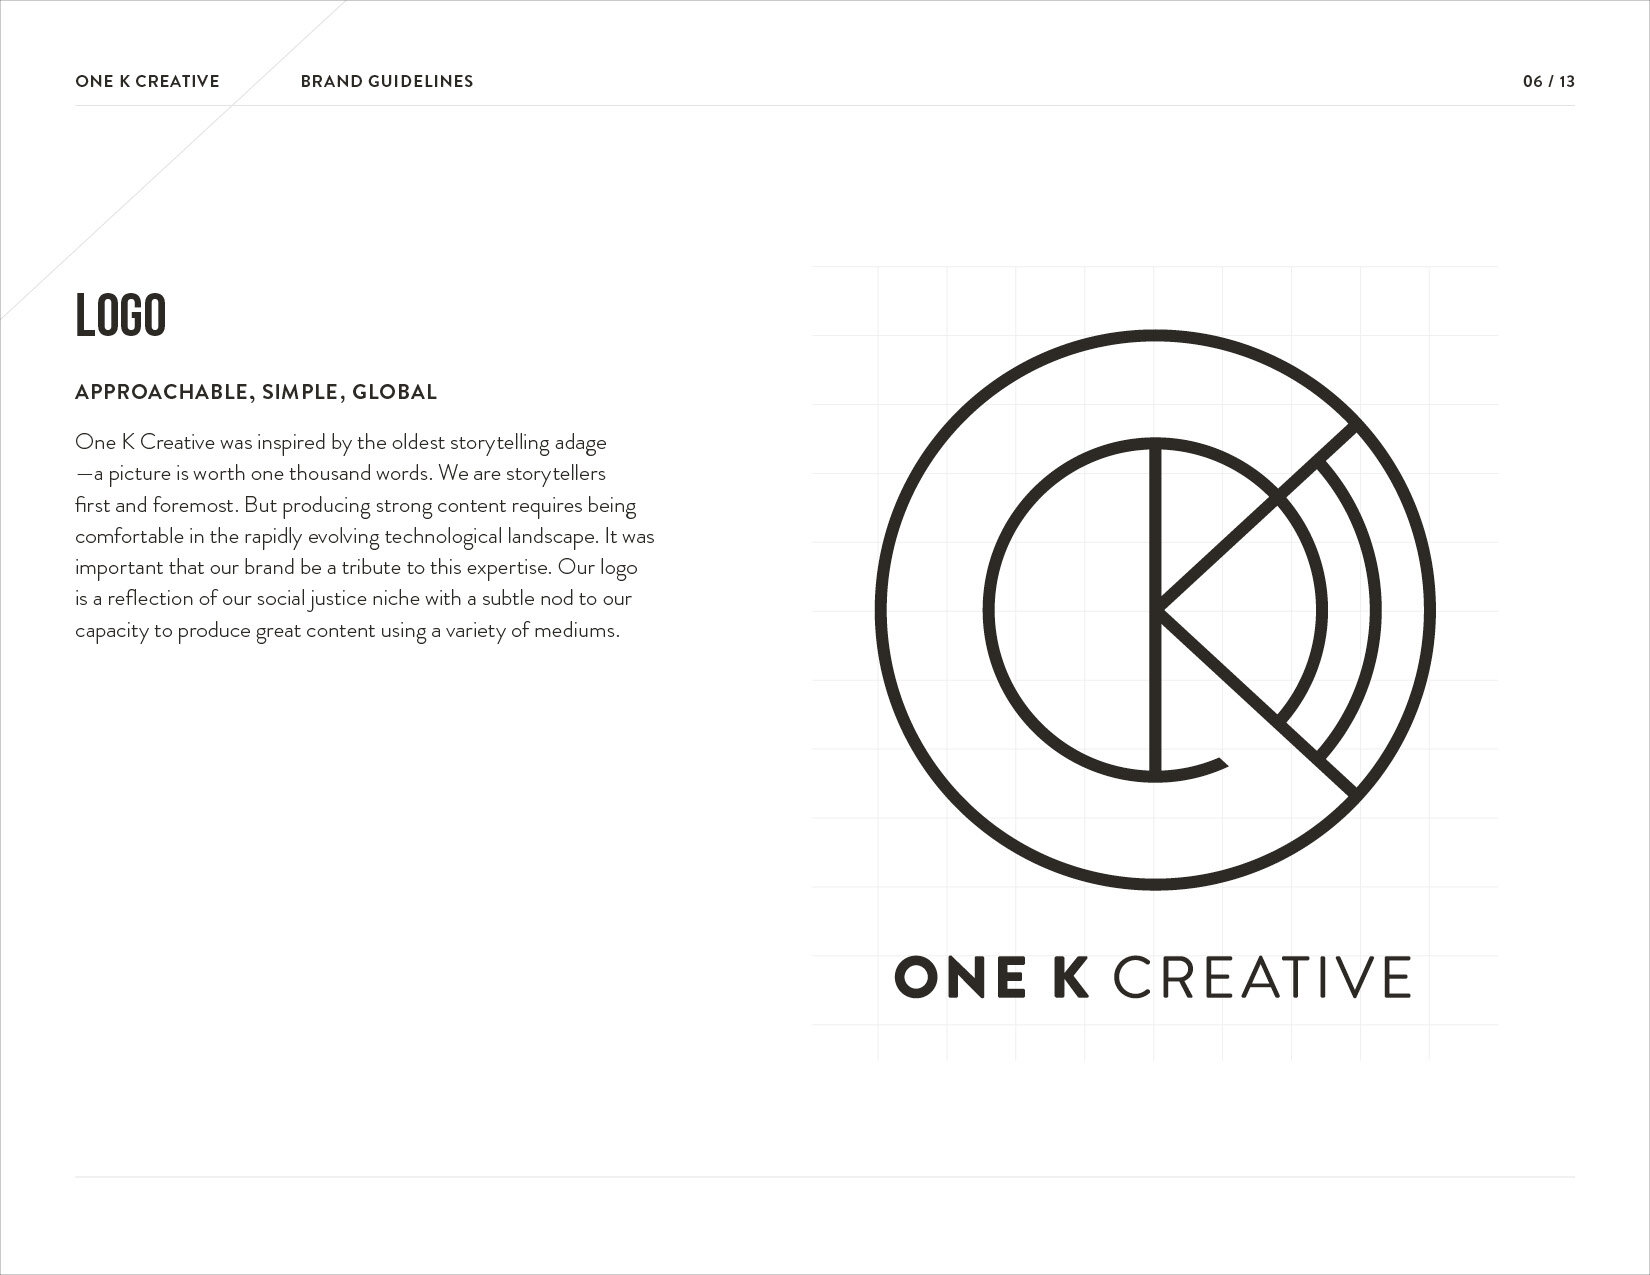 One K Creative - 2018 New Brand Guide9.jpg